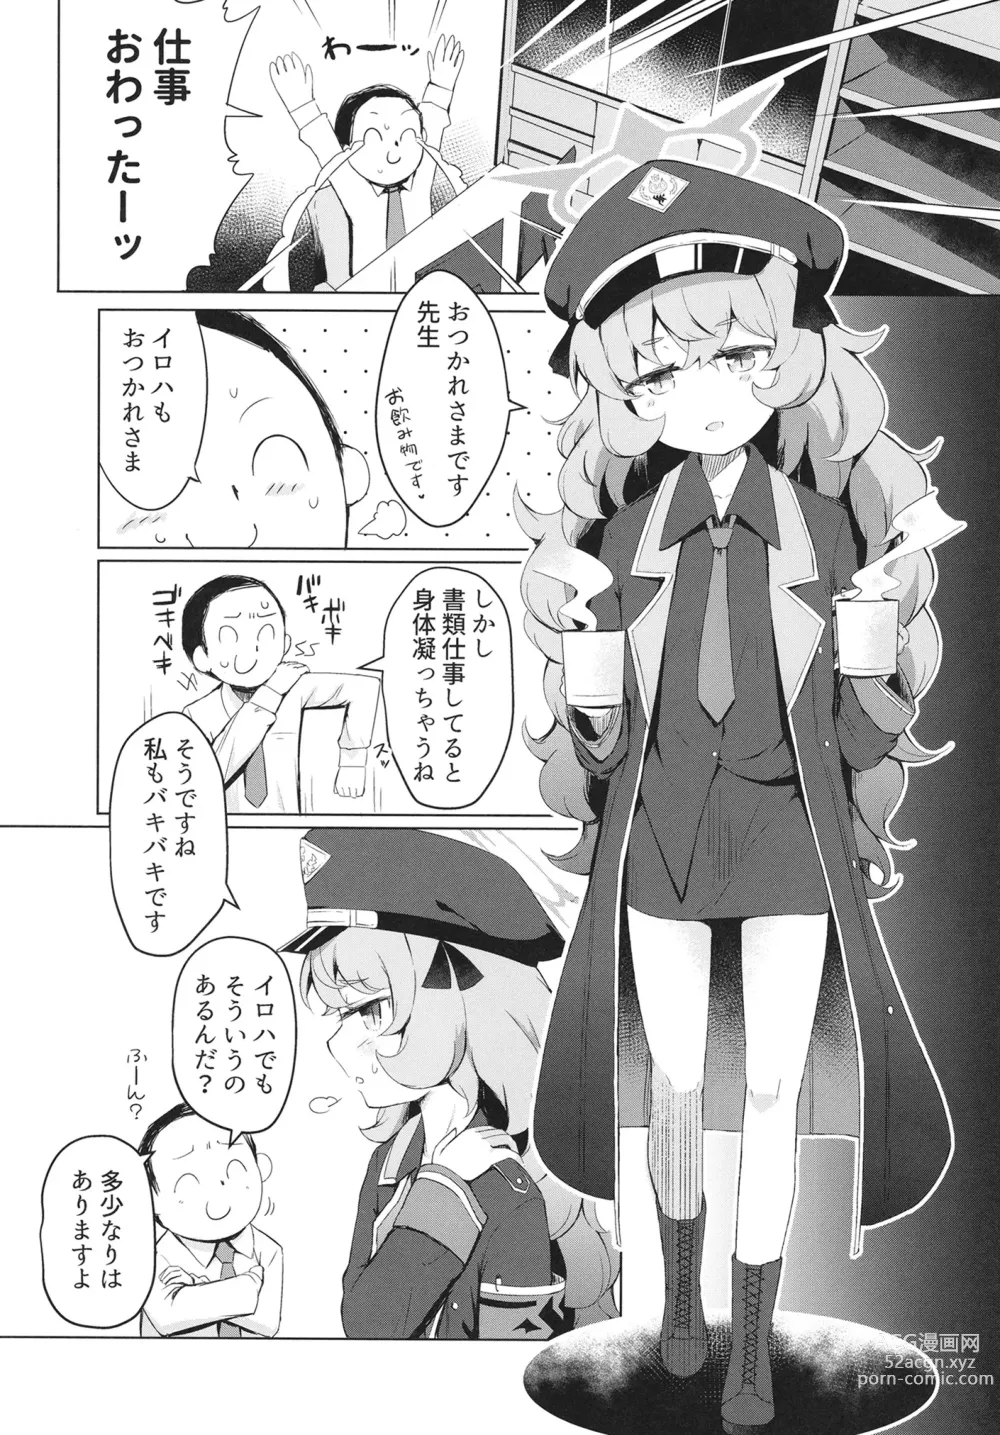 Page 3 of doujinshi Iroha ni Irou o